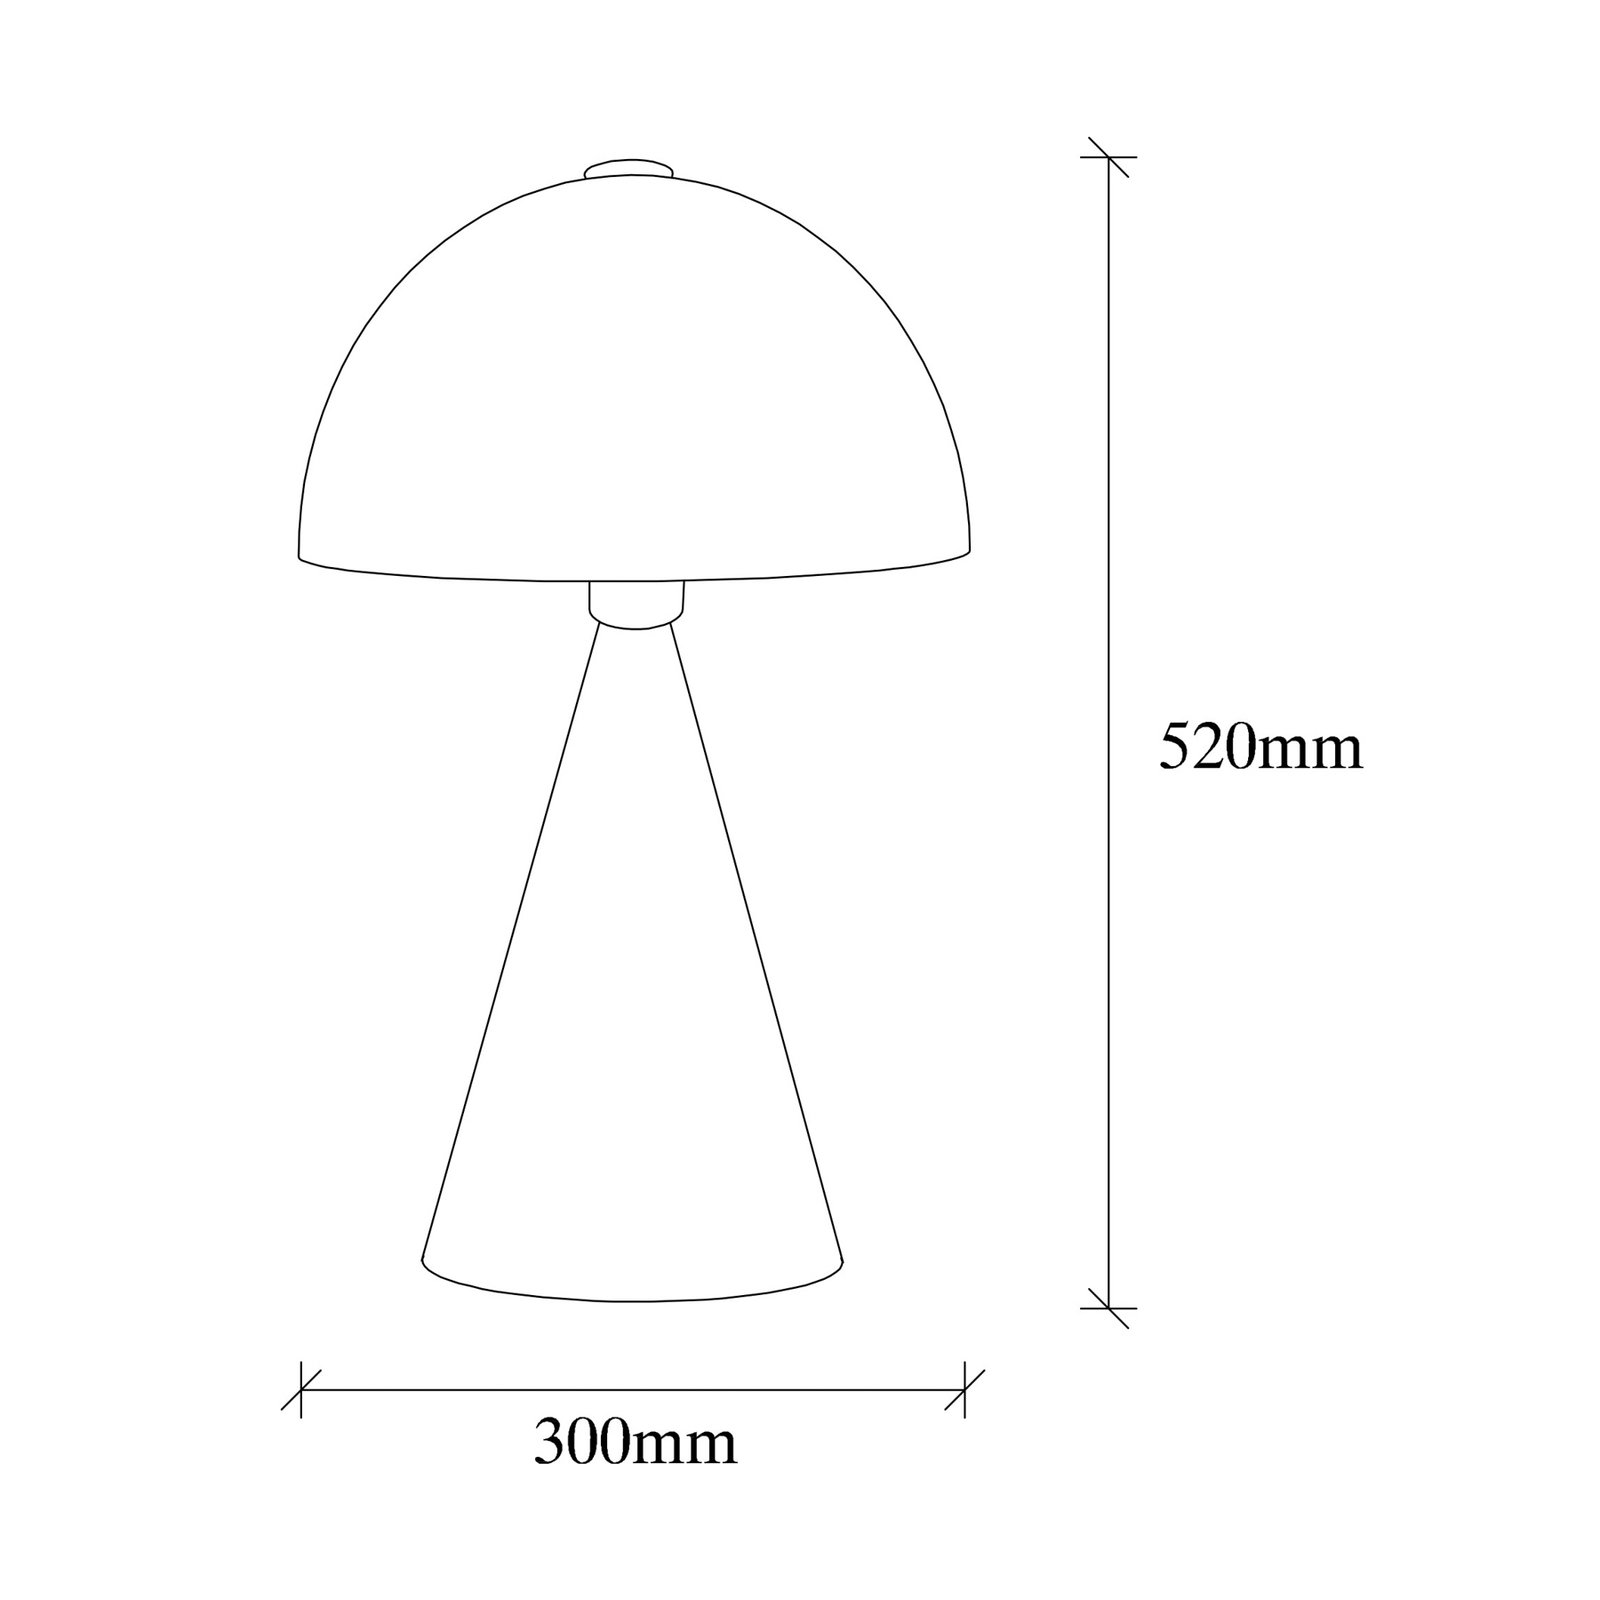 Tafellamp Dodo 5052, hoogte 52 cm, wit